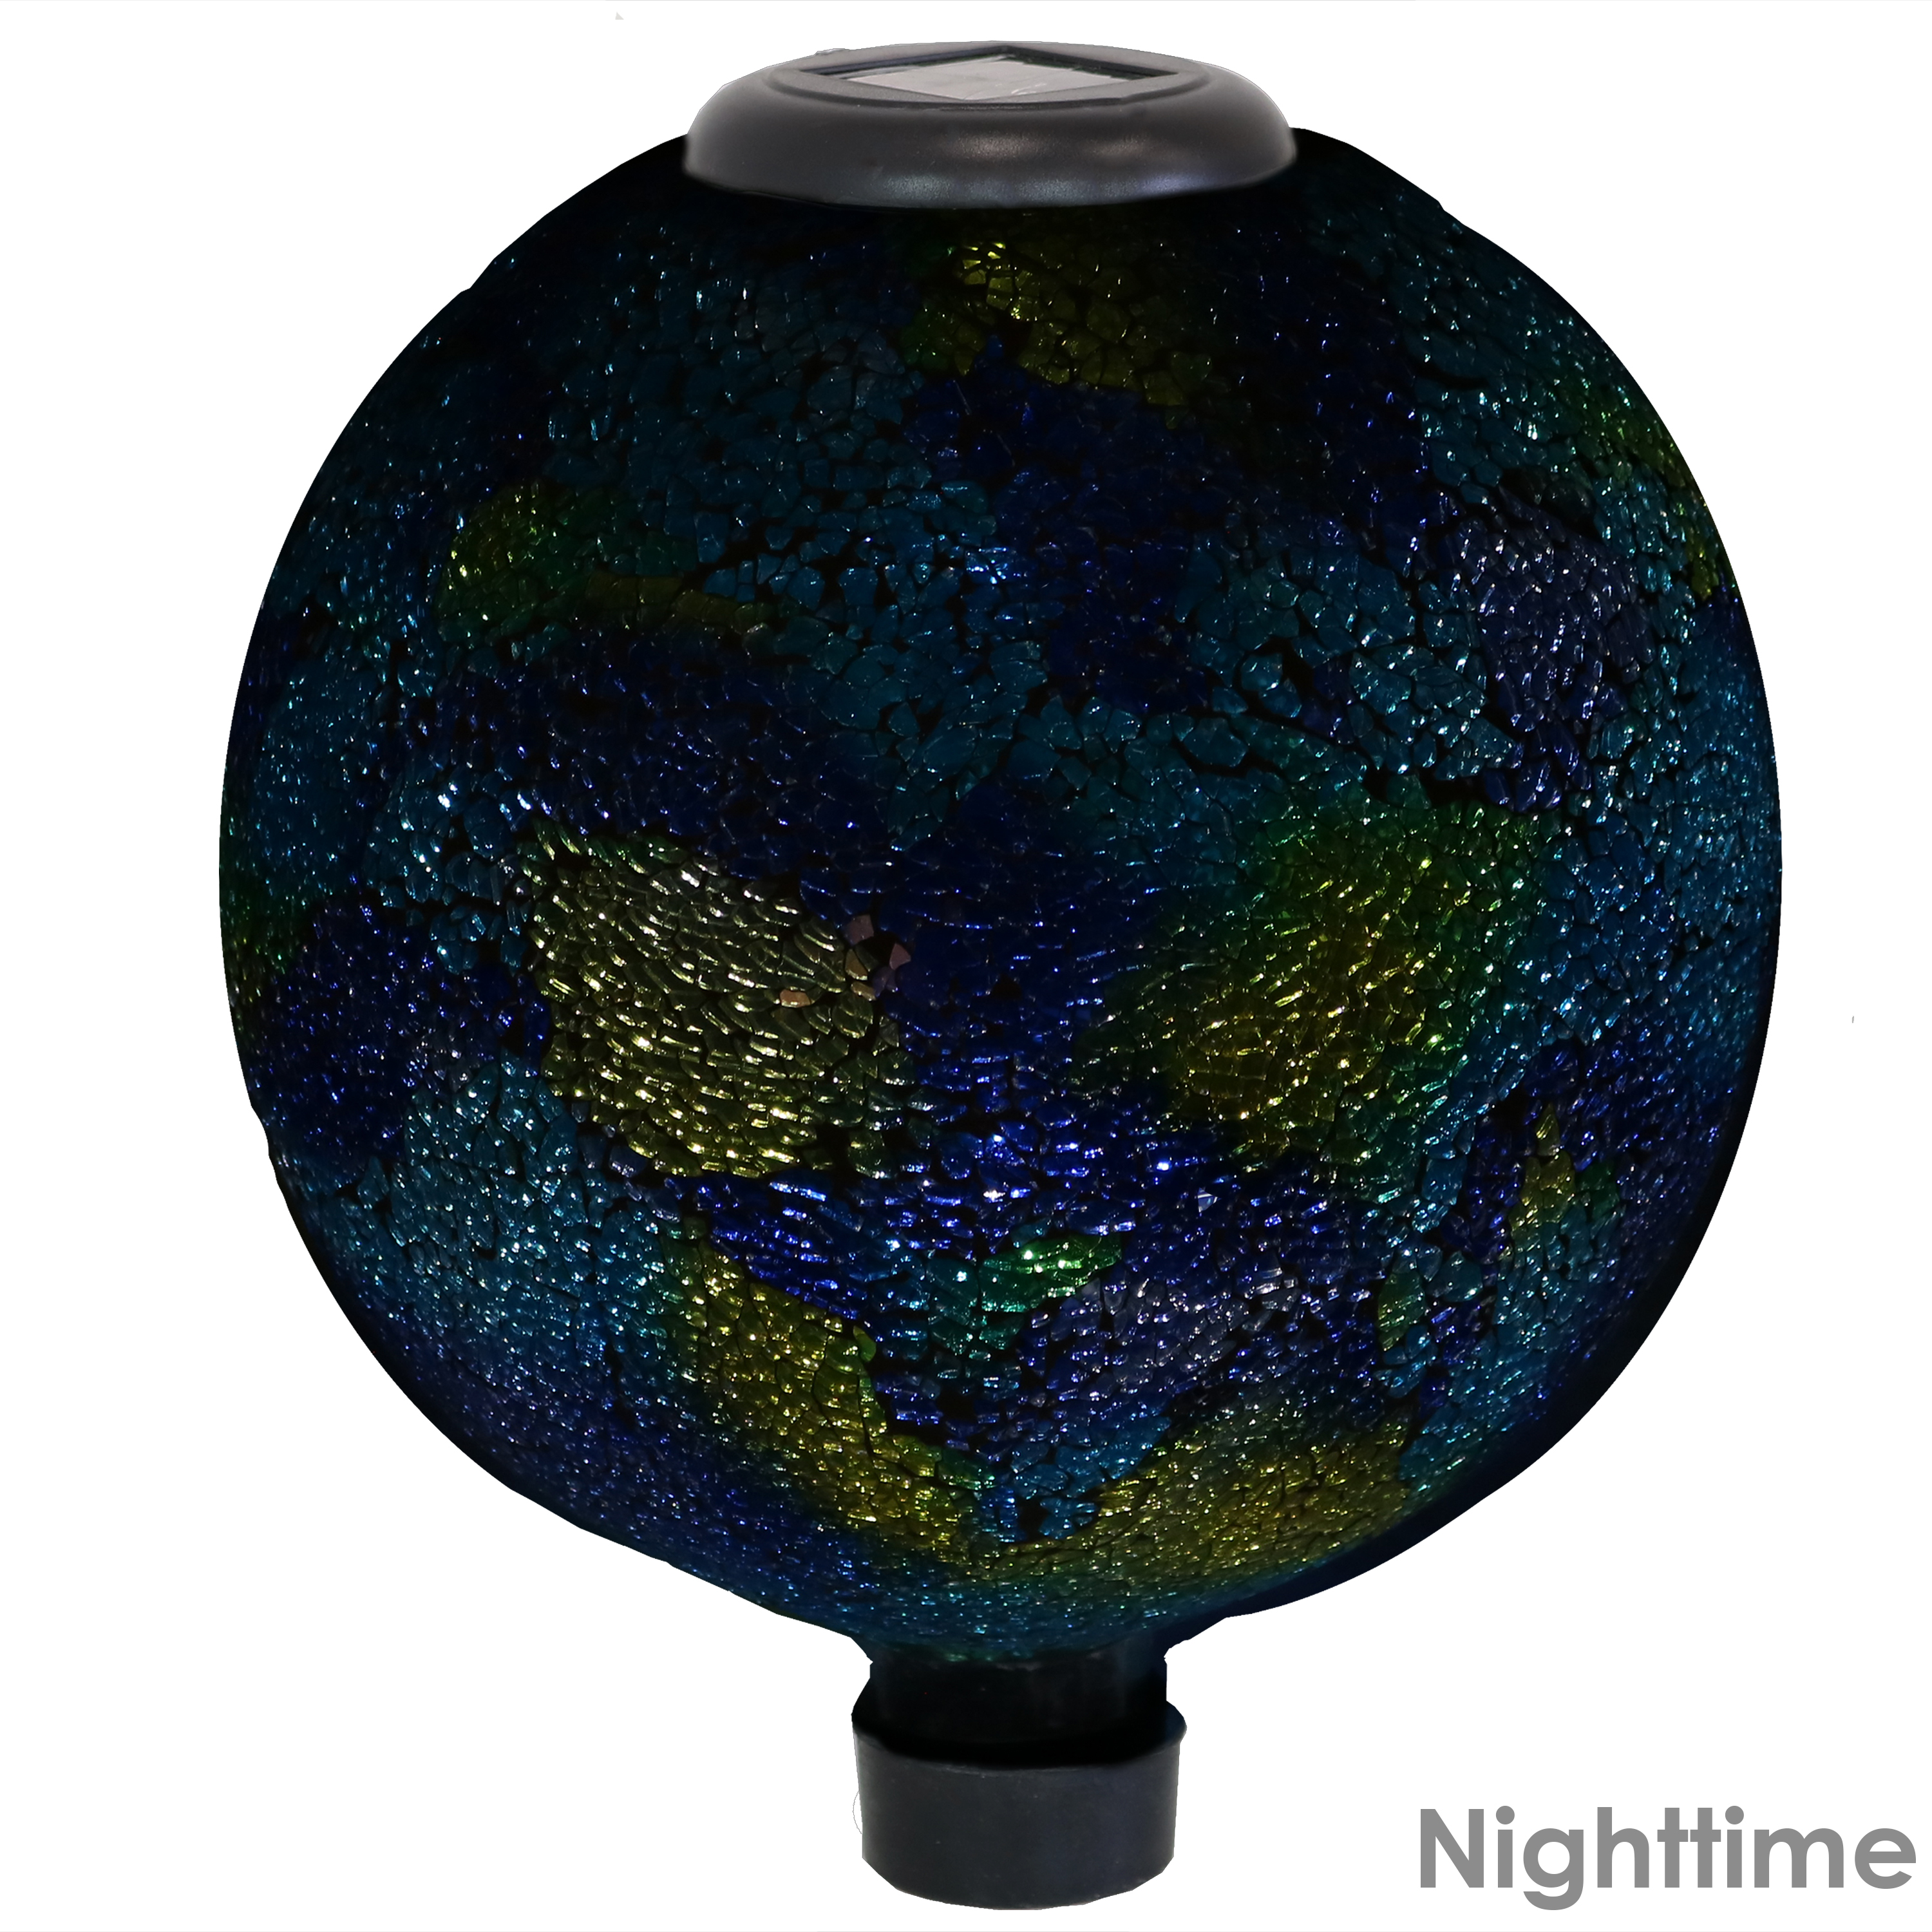 Sunnydaze Decor Azul Terra Crackled Glass Gazing Globe with LED Solar Light - 10-Inch